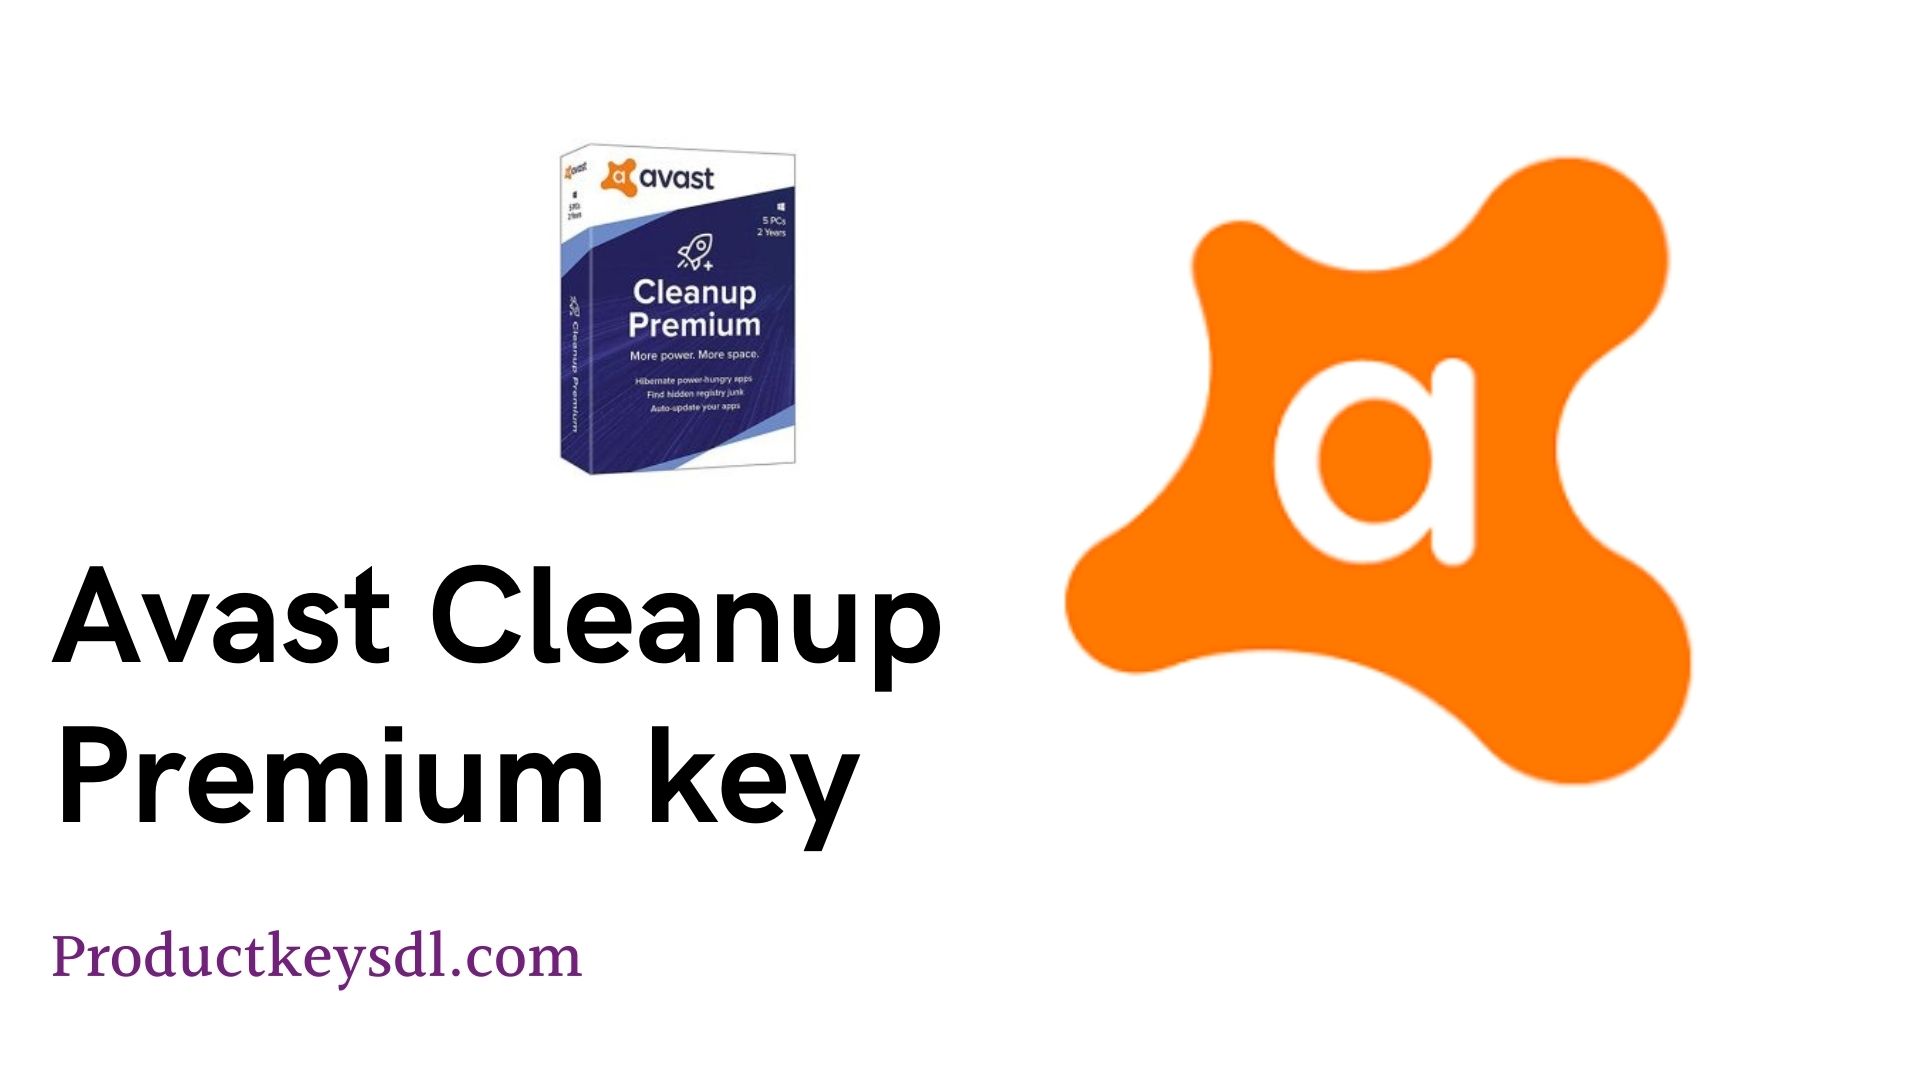 Avast Cleanup Premium key